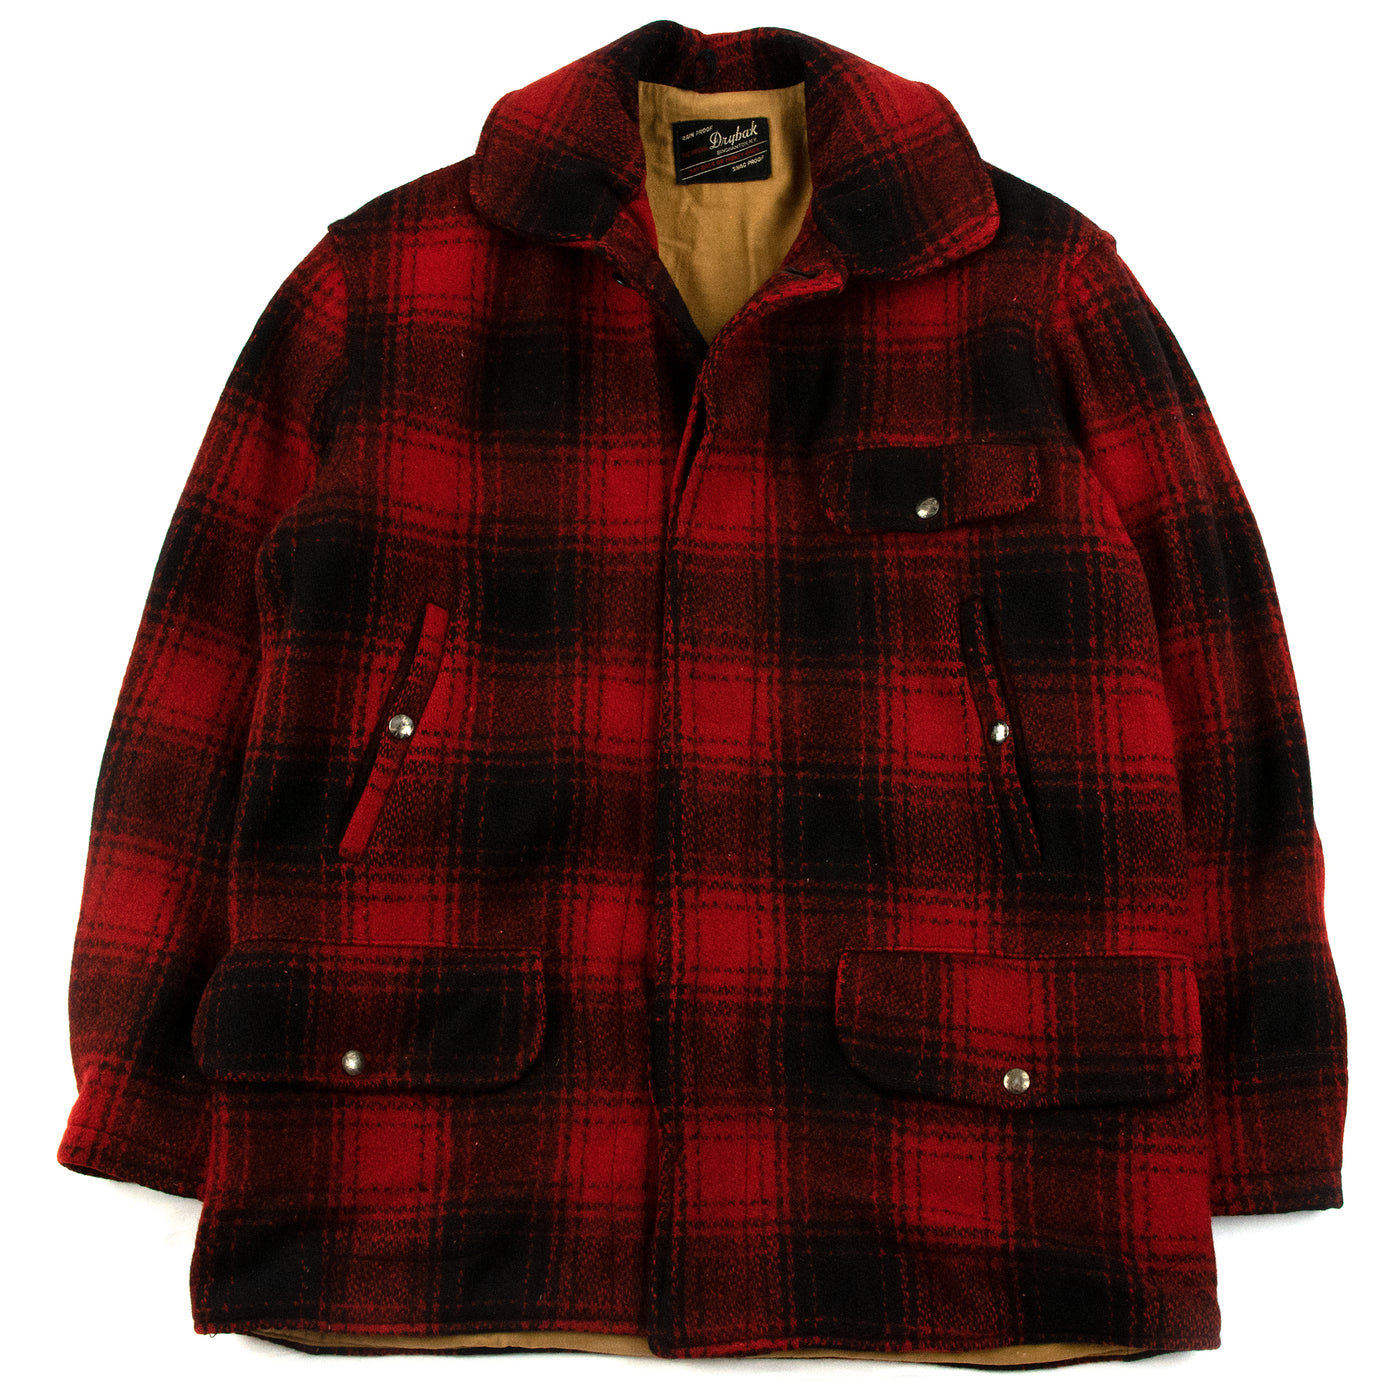 Vintage 1950's Drybak Wool Hunting Plaid FrontMackinaw Jacket Made In U.S.A - M 